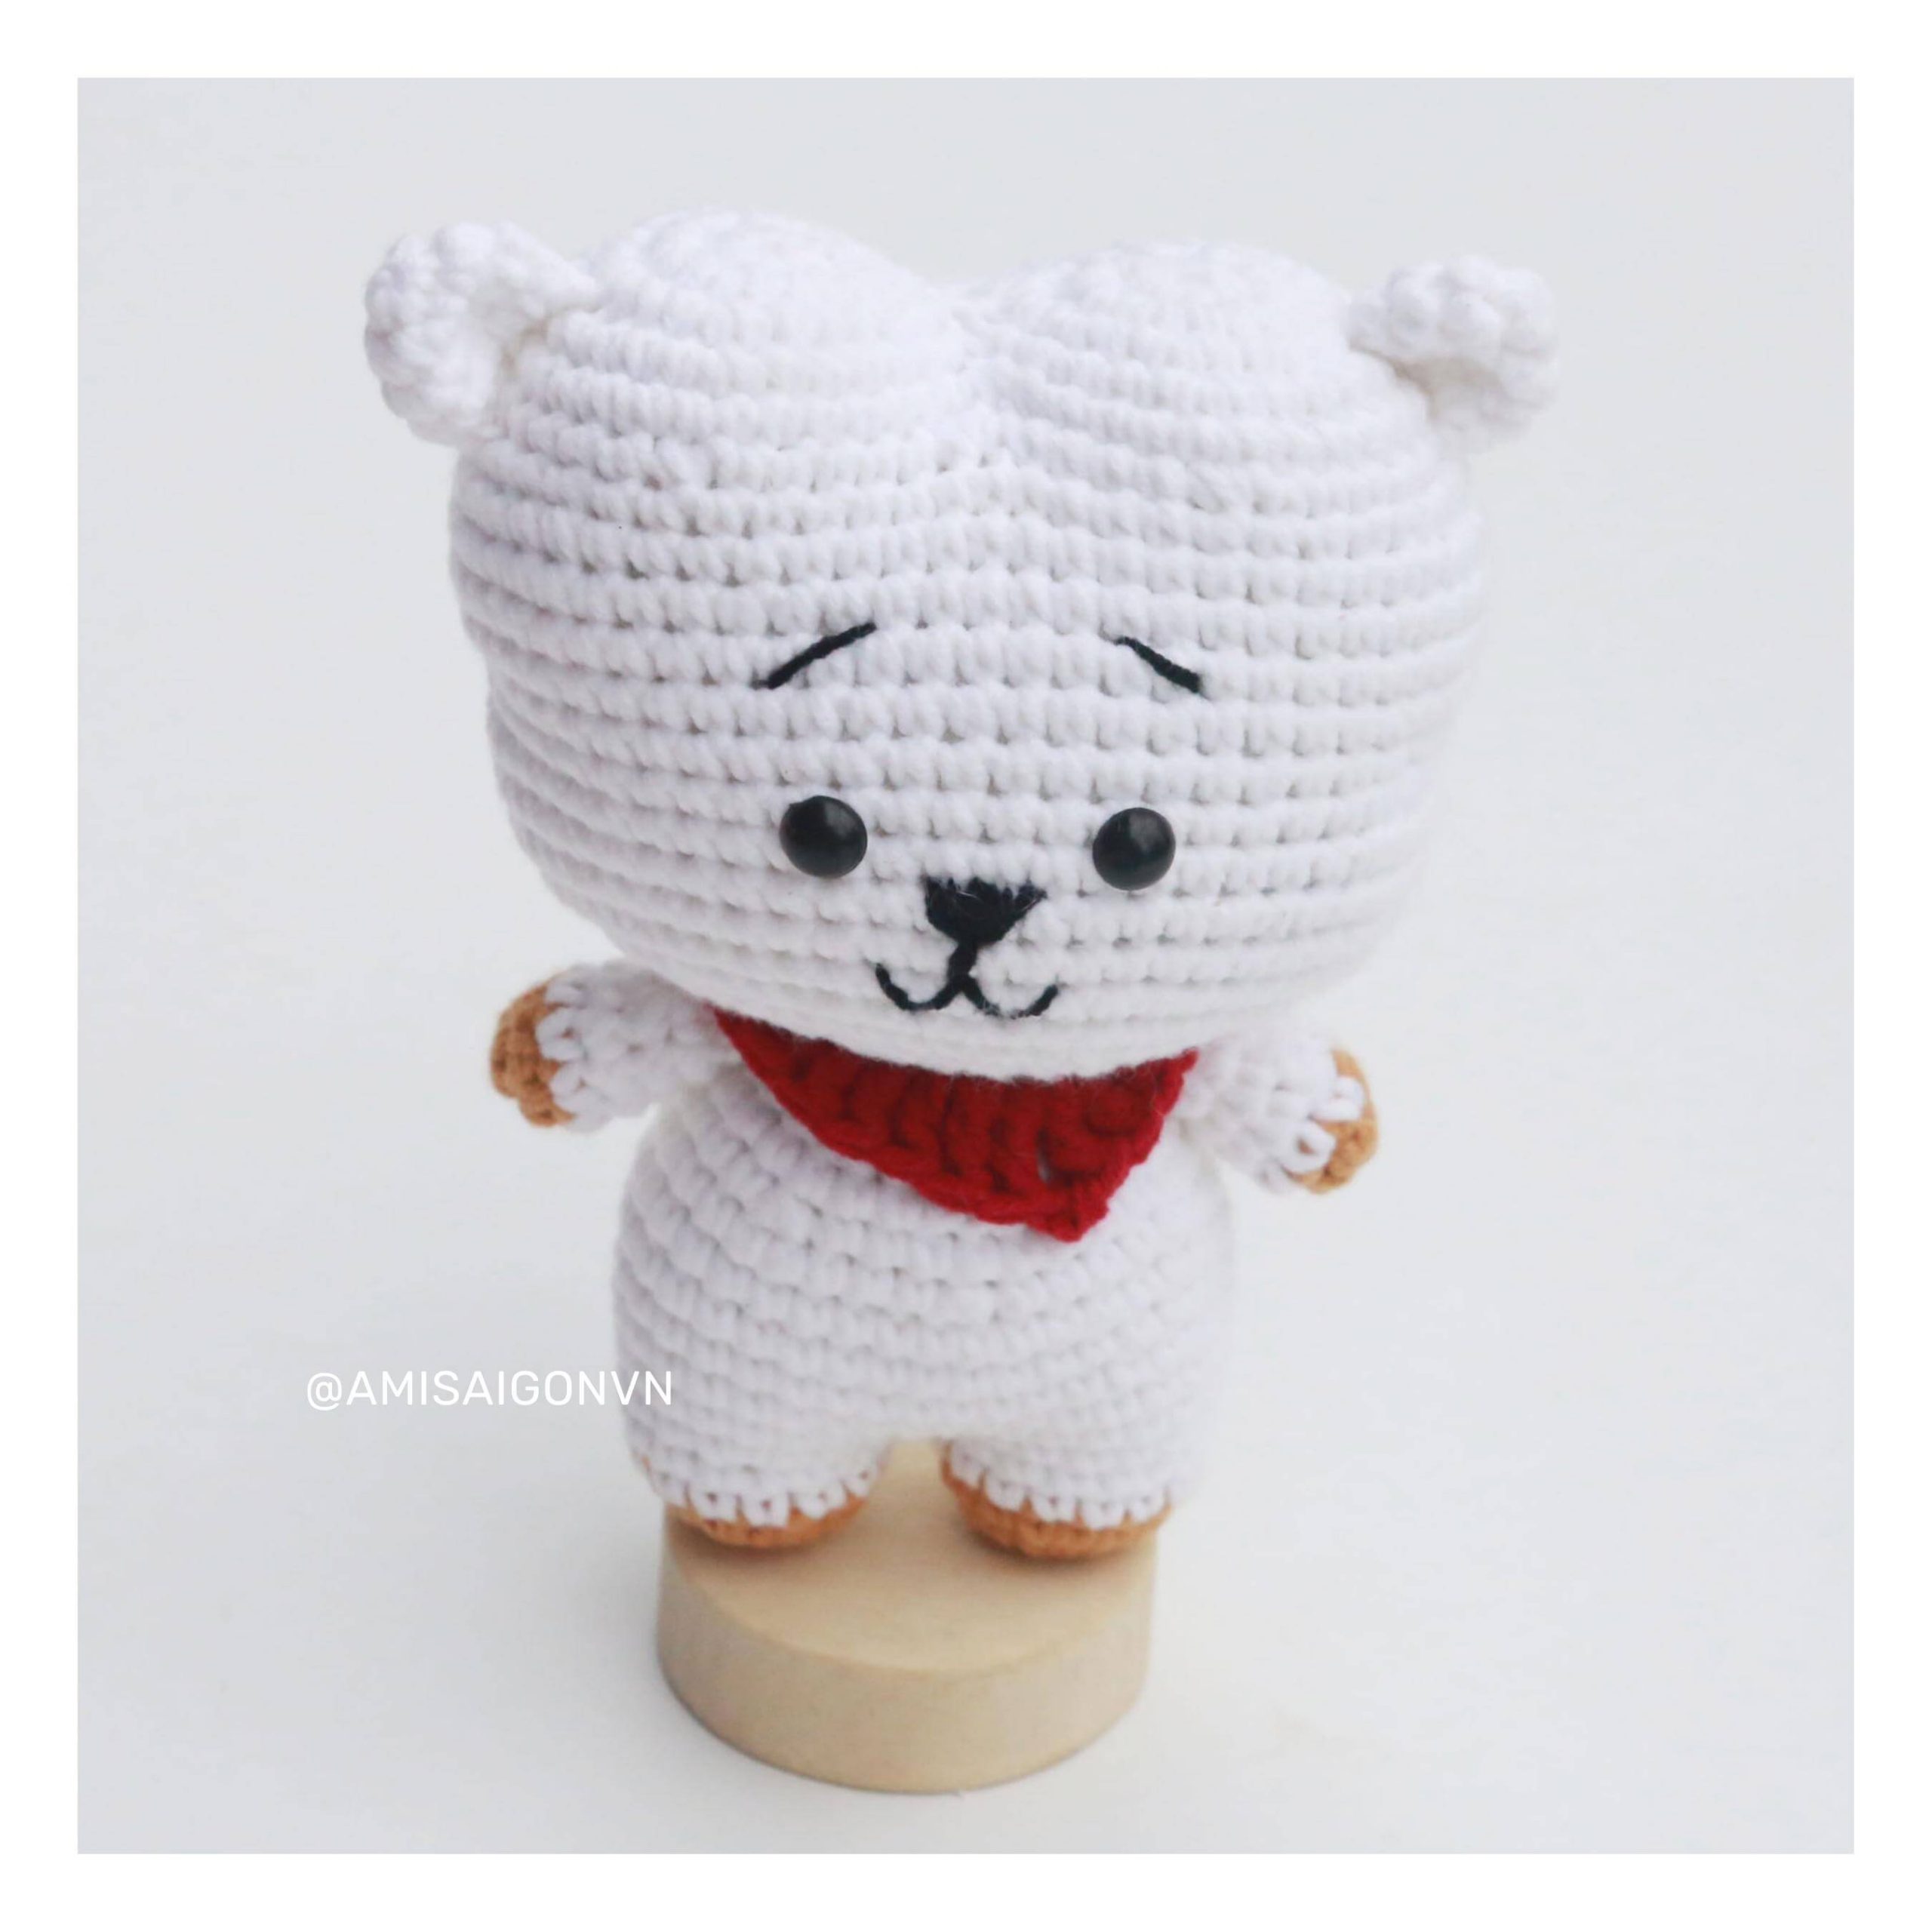 RJ-sheep-amigurumi-crochet-pattern-amisaigon-bts-bt21 (4)